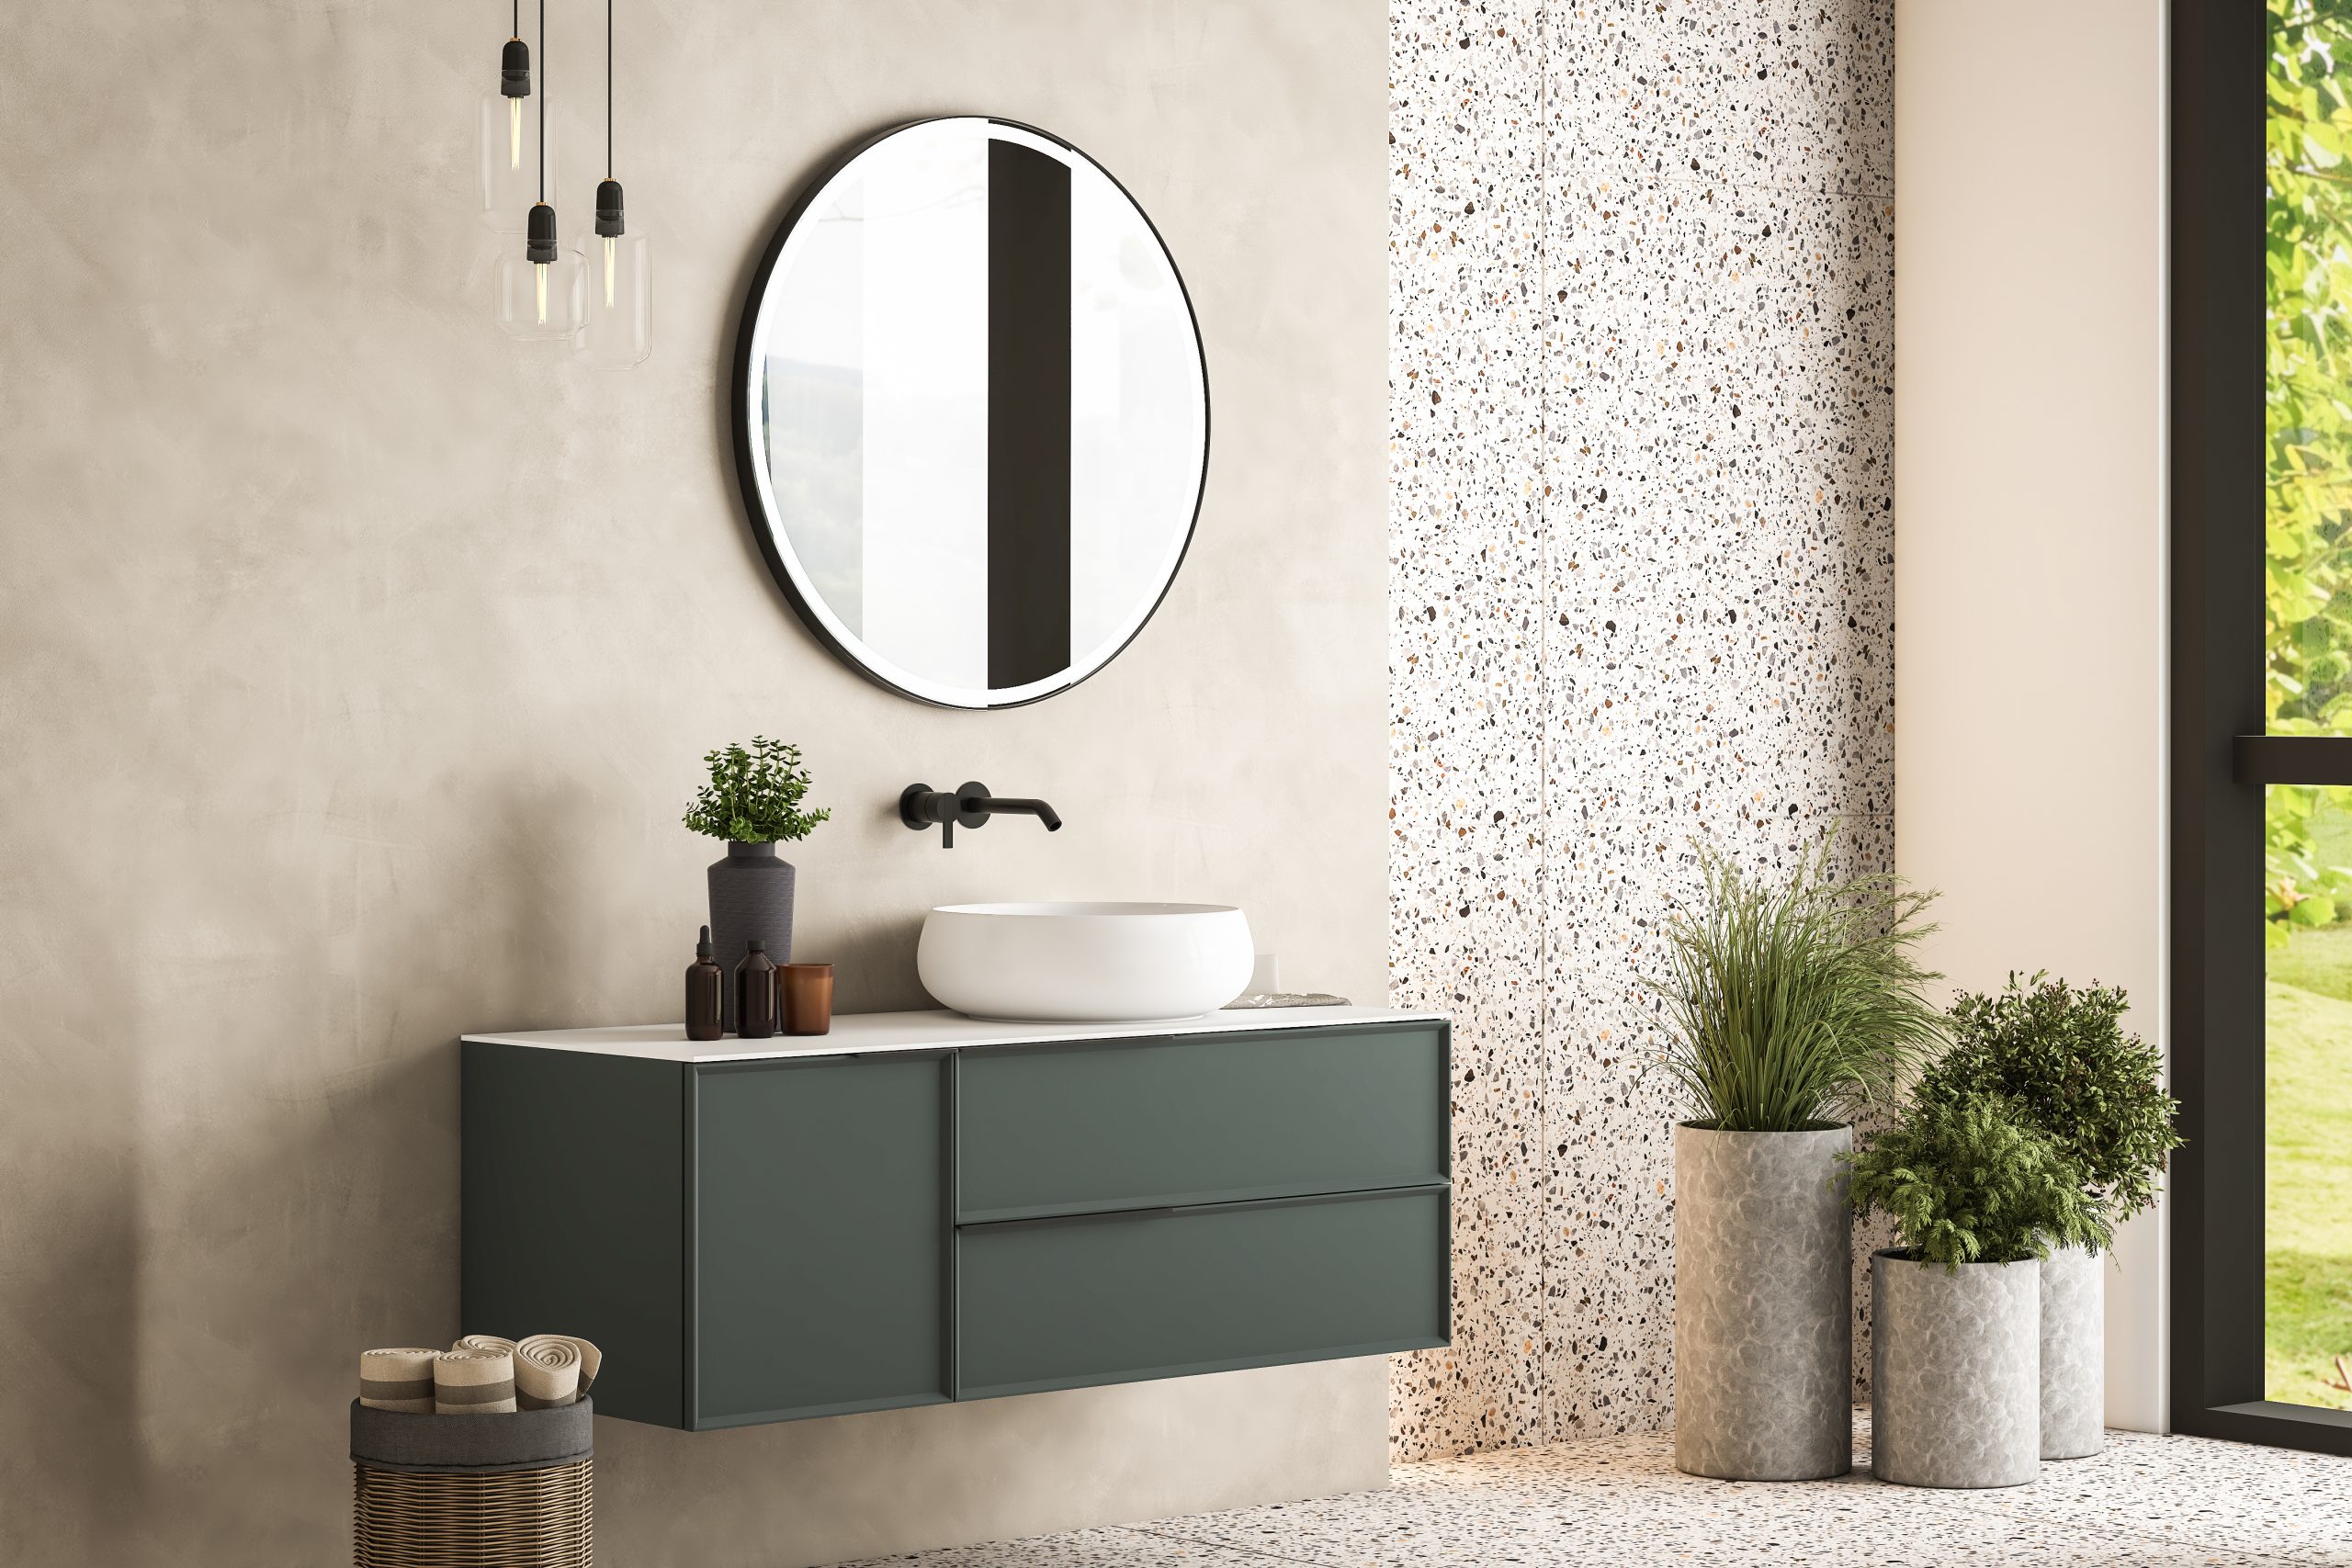 Modern minimalist bathroom interior,green bathroom cabinet, white sink, wooden vanity, interior plants, bathroom accessories, white bathtub, concrete wall, terrazzo flooring.3d rendering